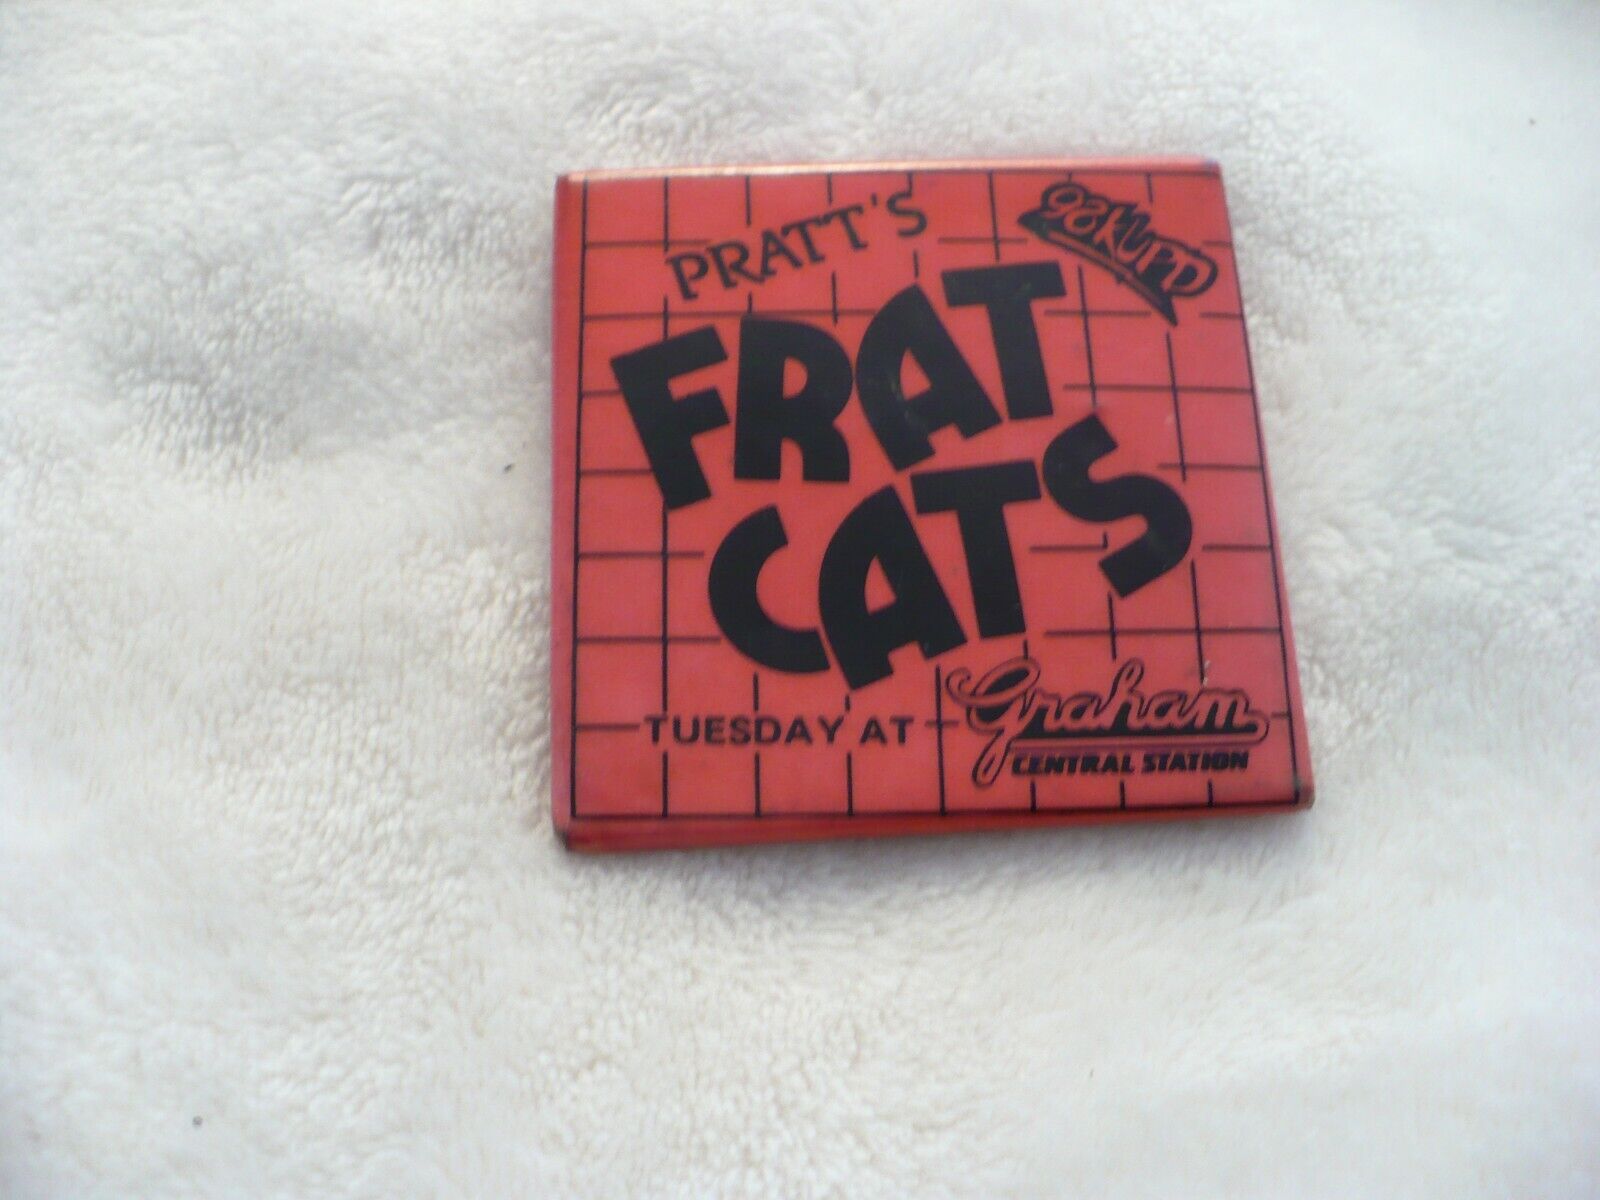 LK- PRATT'S FRAT CATS 98 KUPD TUESDAY AT GRAHAM CENTRAL STATION PIN BADGE #16577